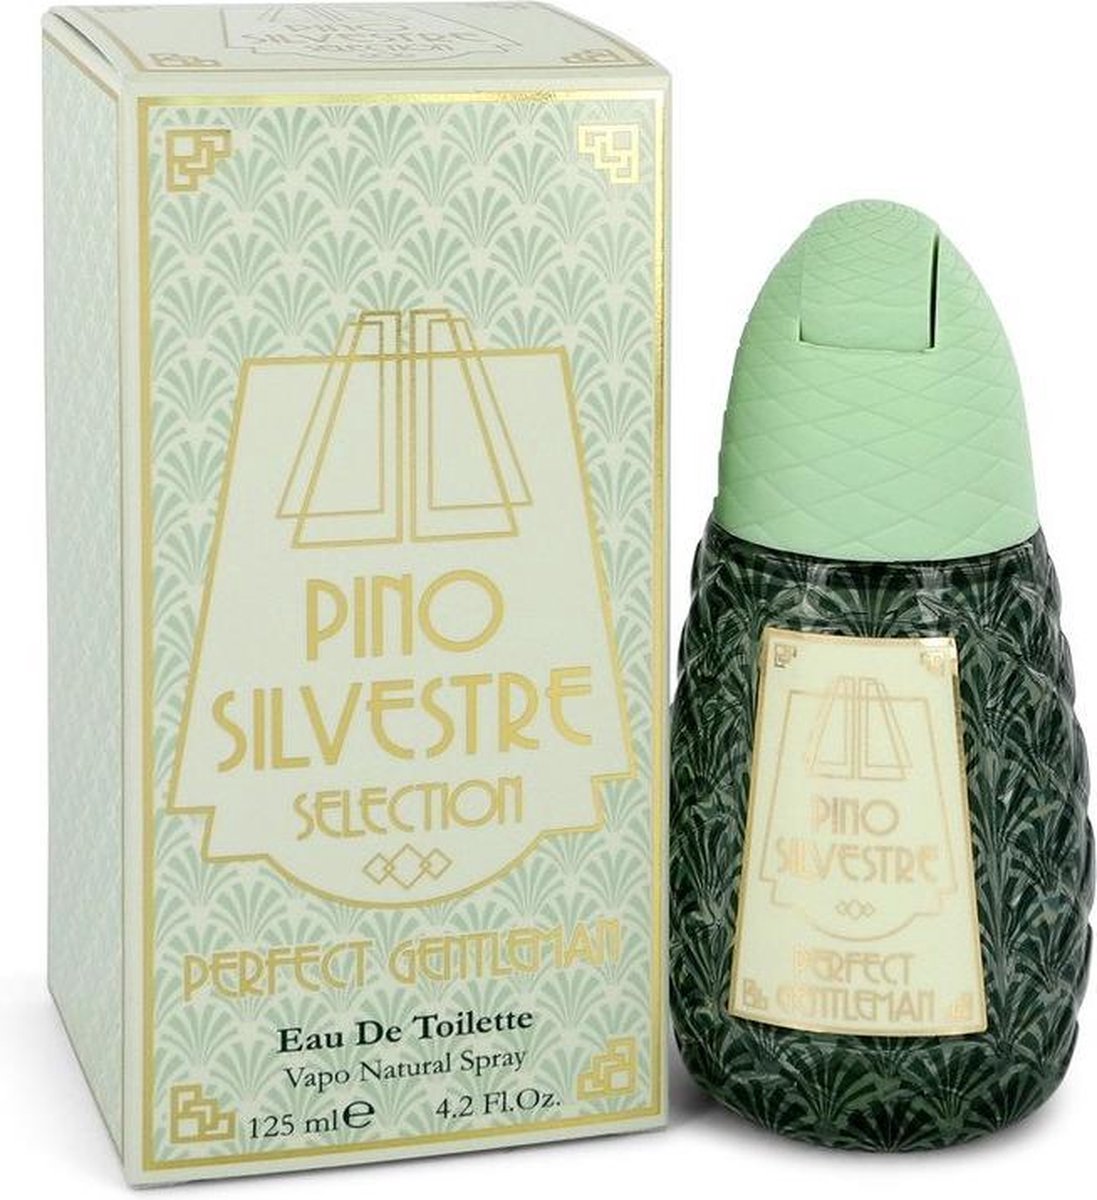 Pino Silvestre Selection Perfect Gentleman - Eau de toilette spray - 125 ml